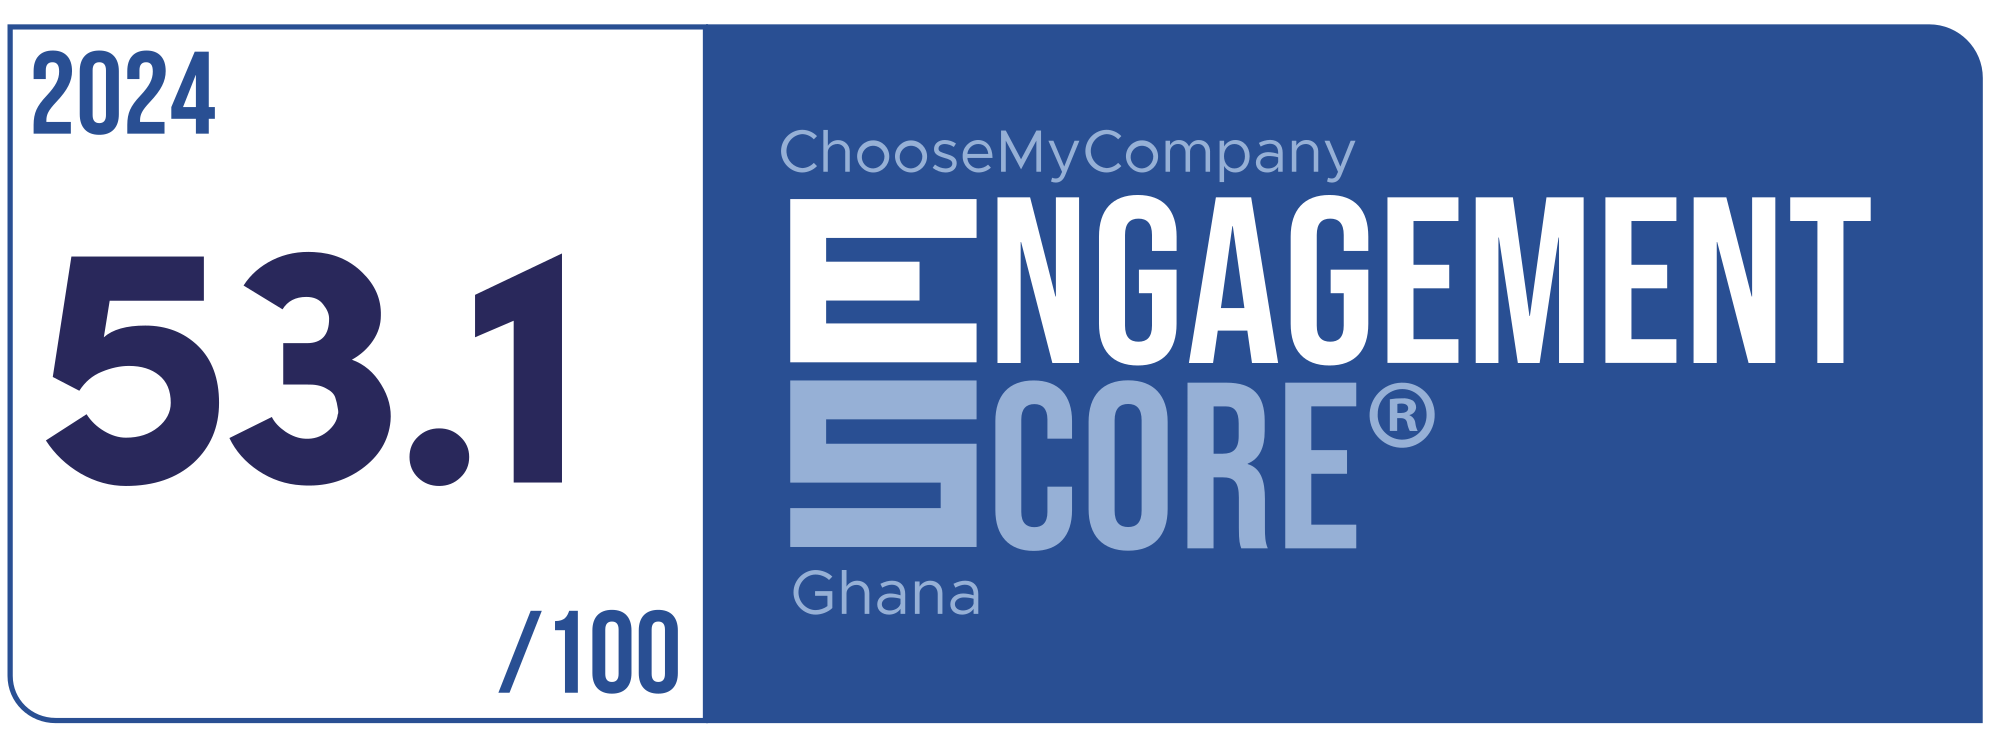 Label Engagement Score 2024 Ghana